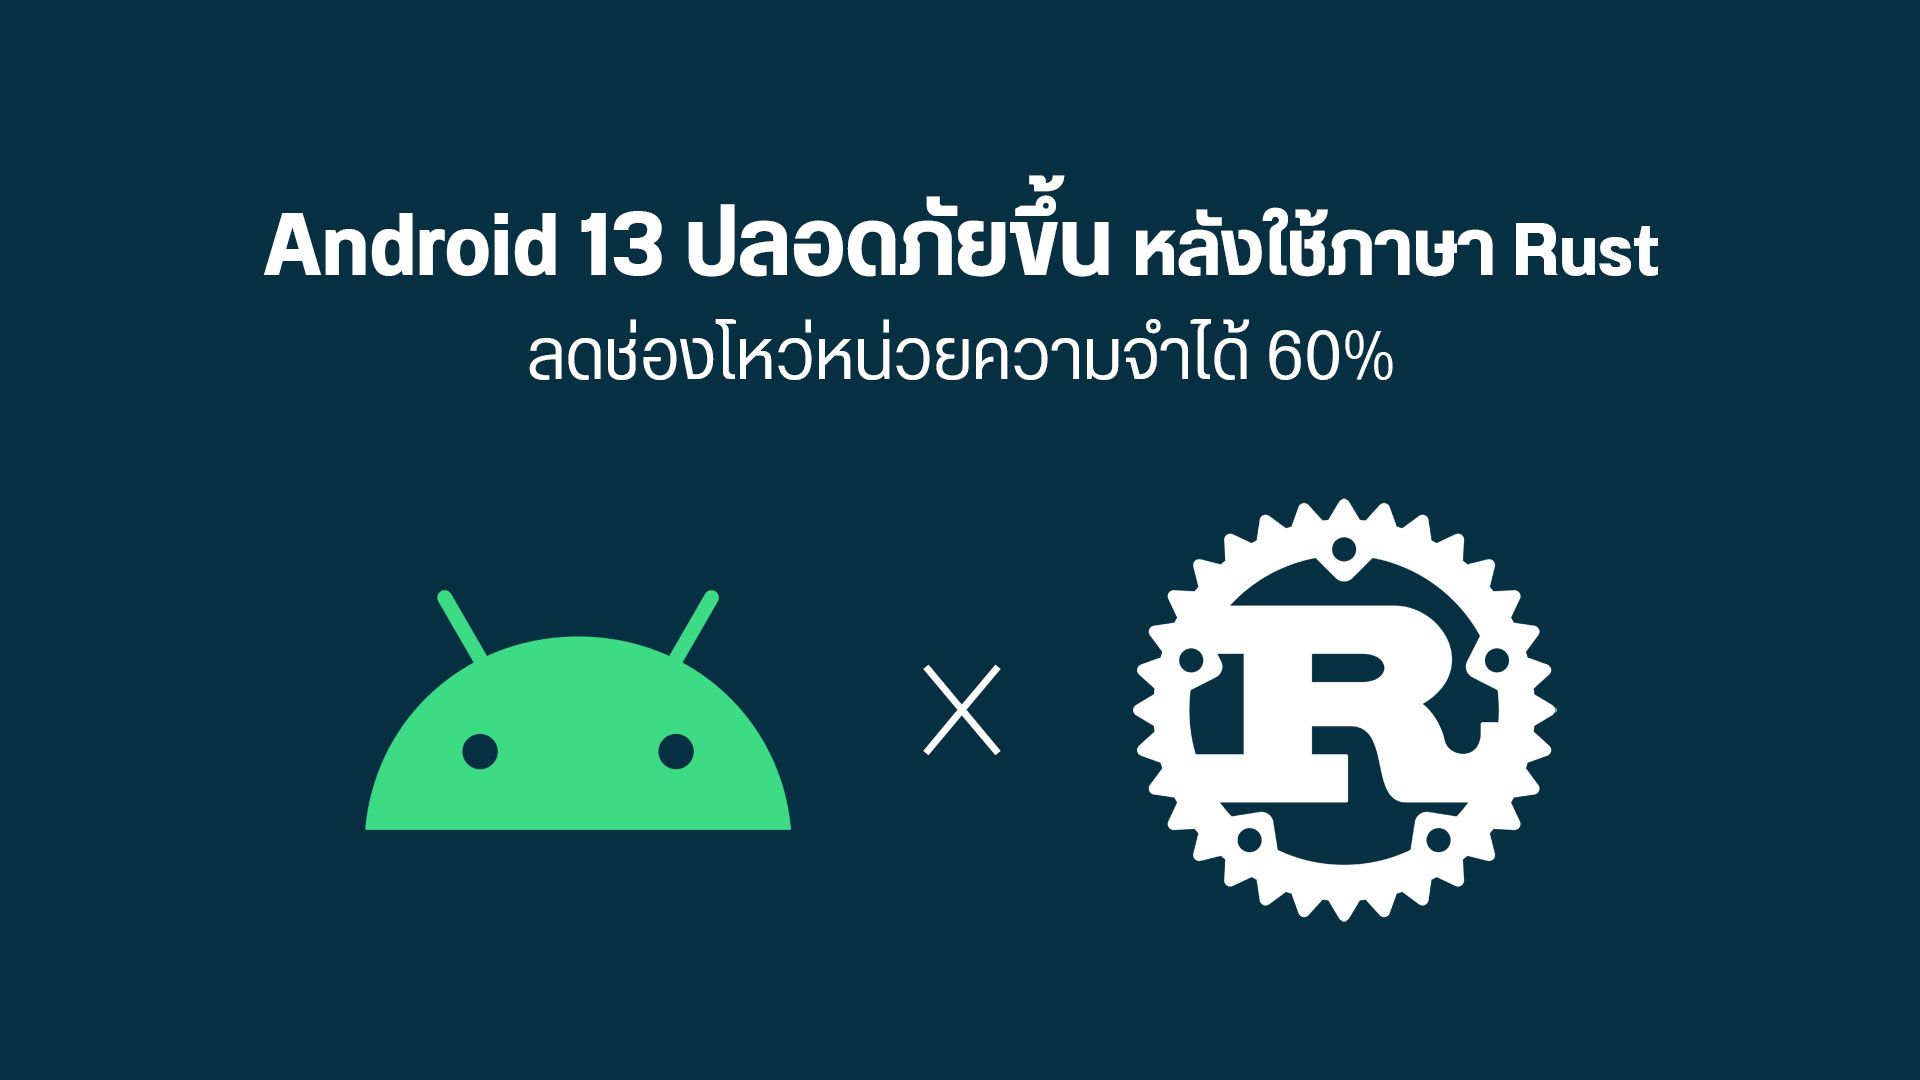 Google รายงานช่องโหว่หน่วยความจำบน Android 13 ลดลงกว่า 60% จากการใช้ภาษา Rust ใน AOSP